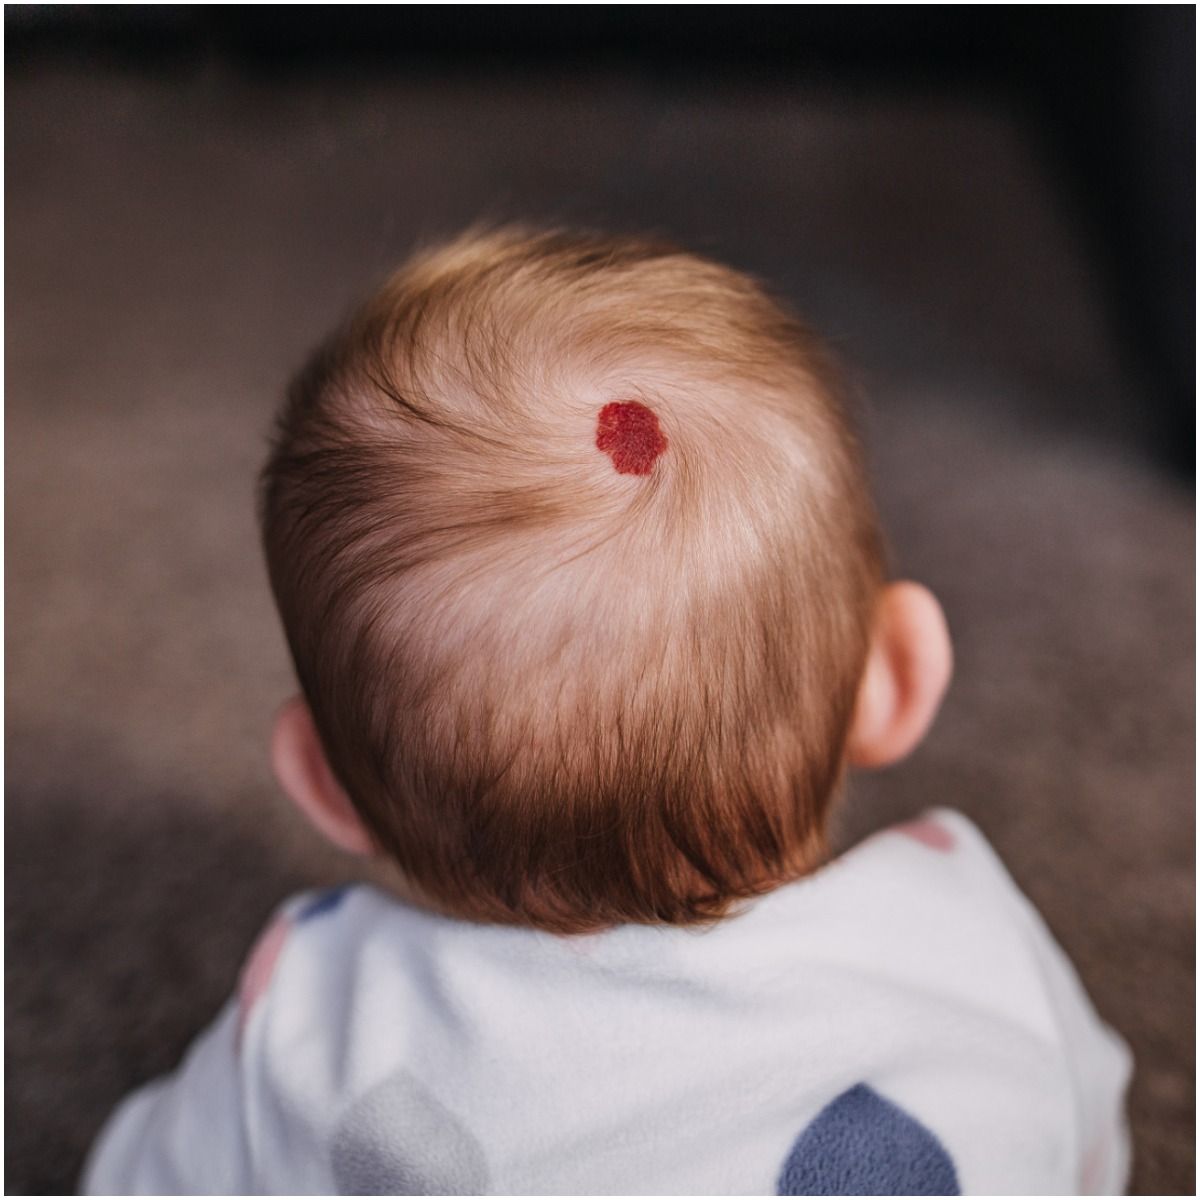 birthmark on baby head